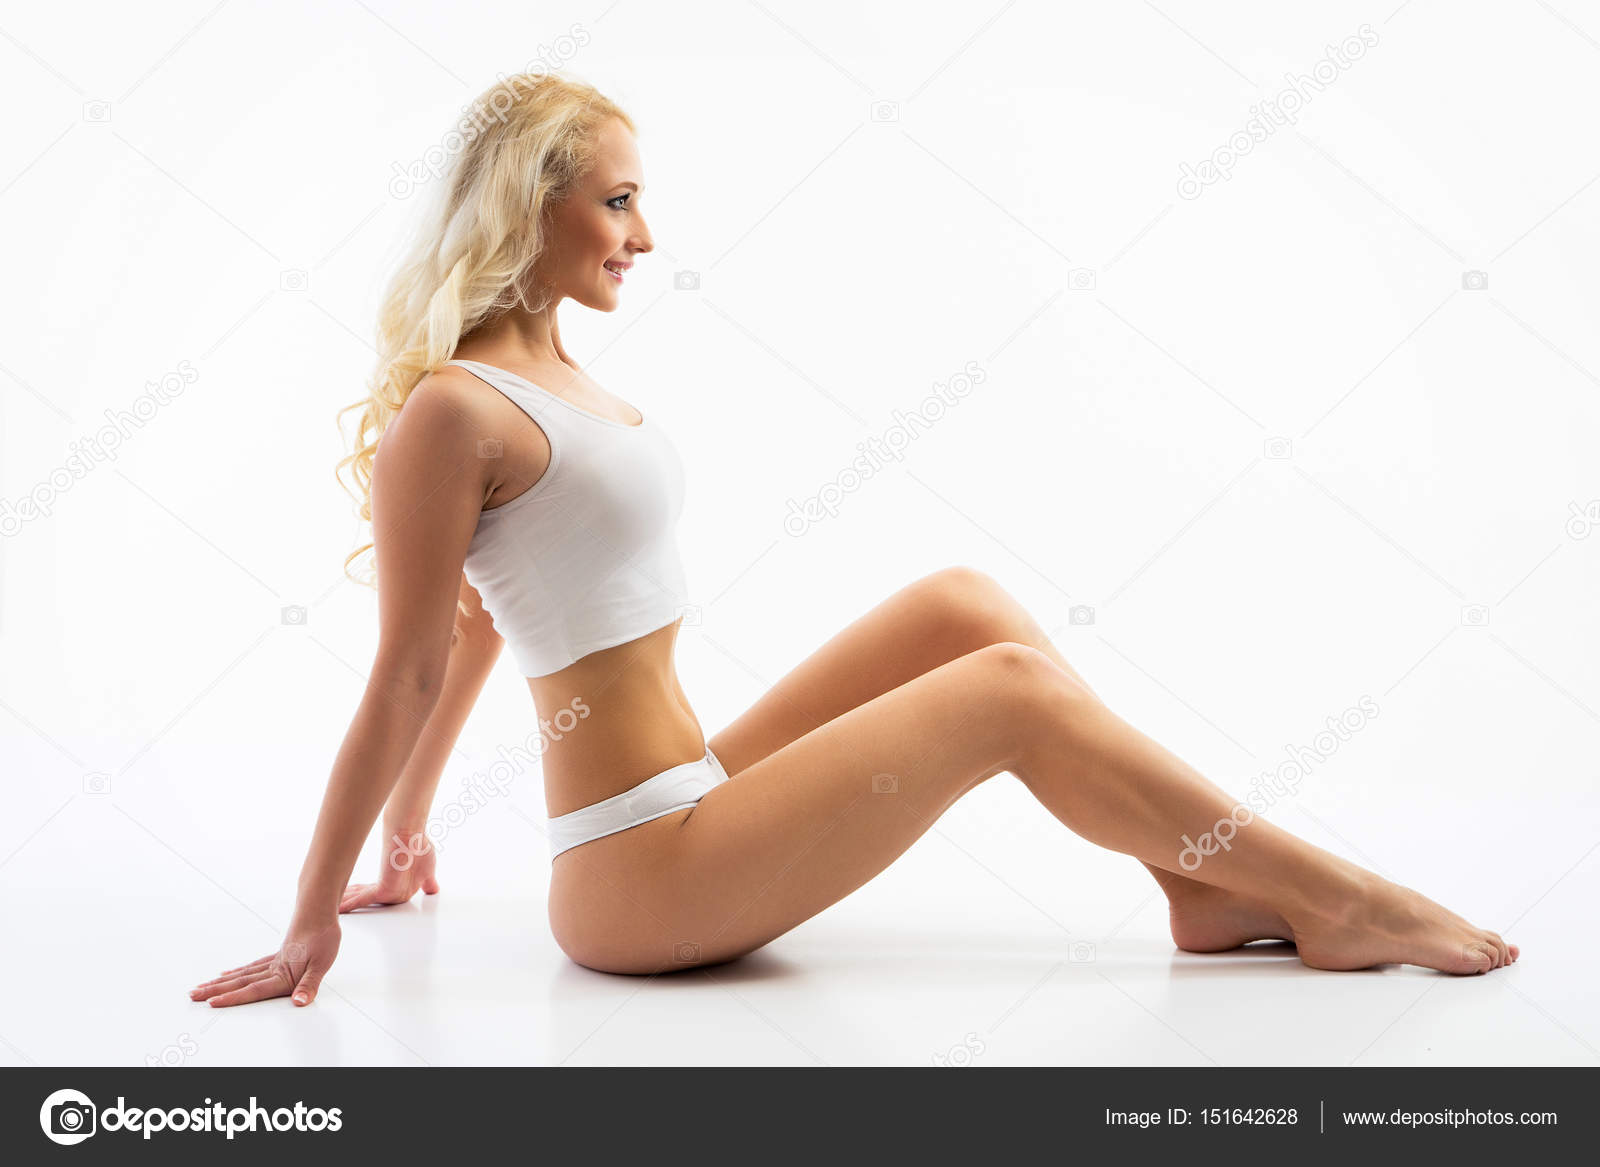 Beautiful woman with perfect figure Stock Photo